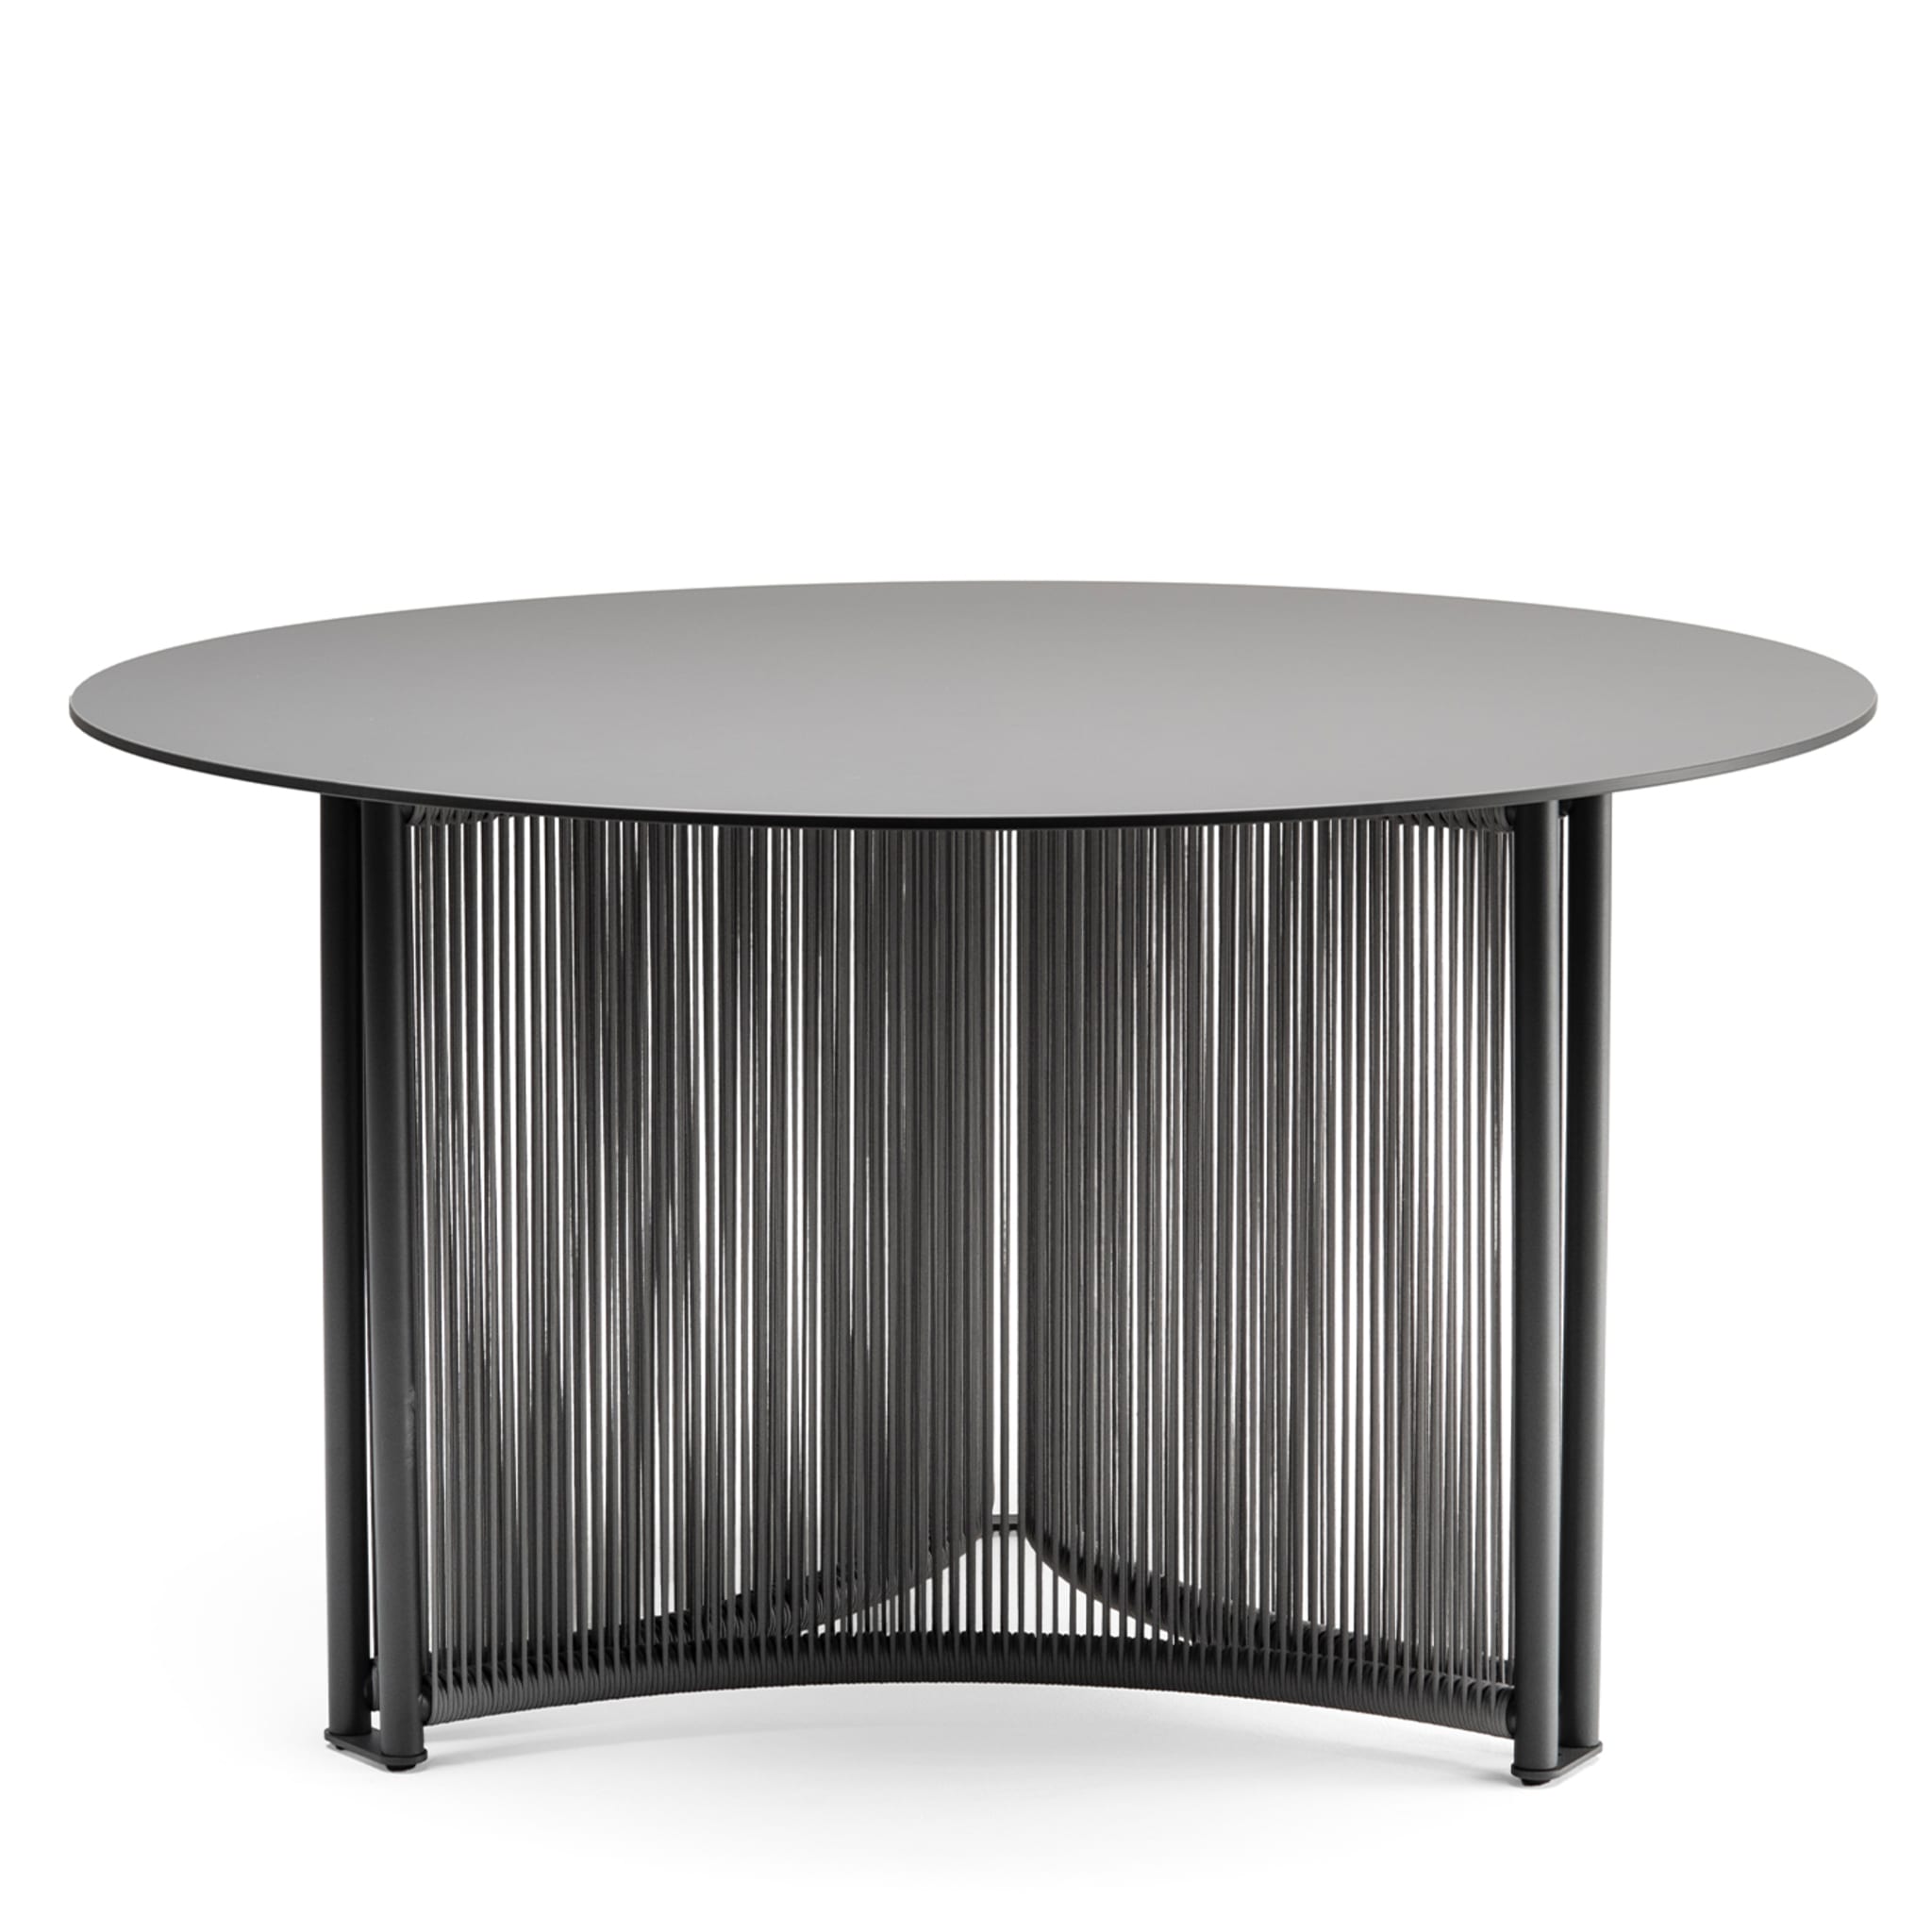 Altana T-RO Round Gray Table by Antonio De Marco - Alternative view 3